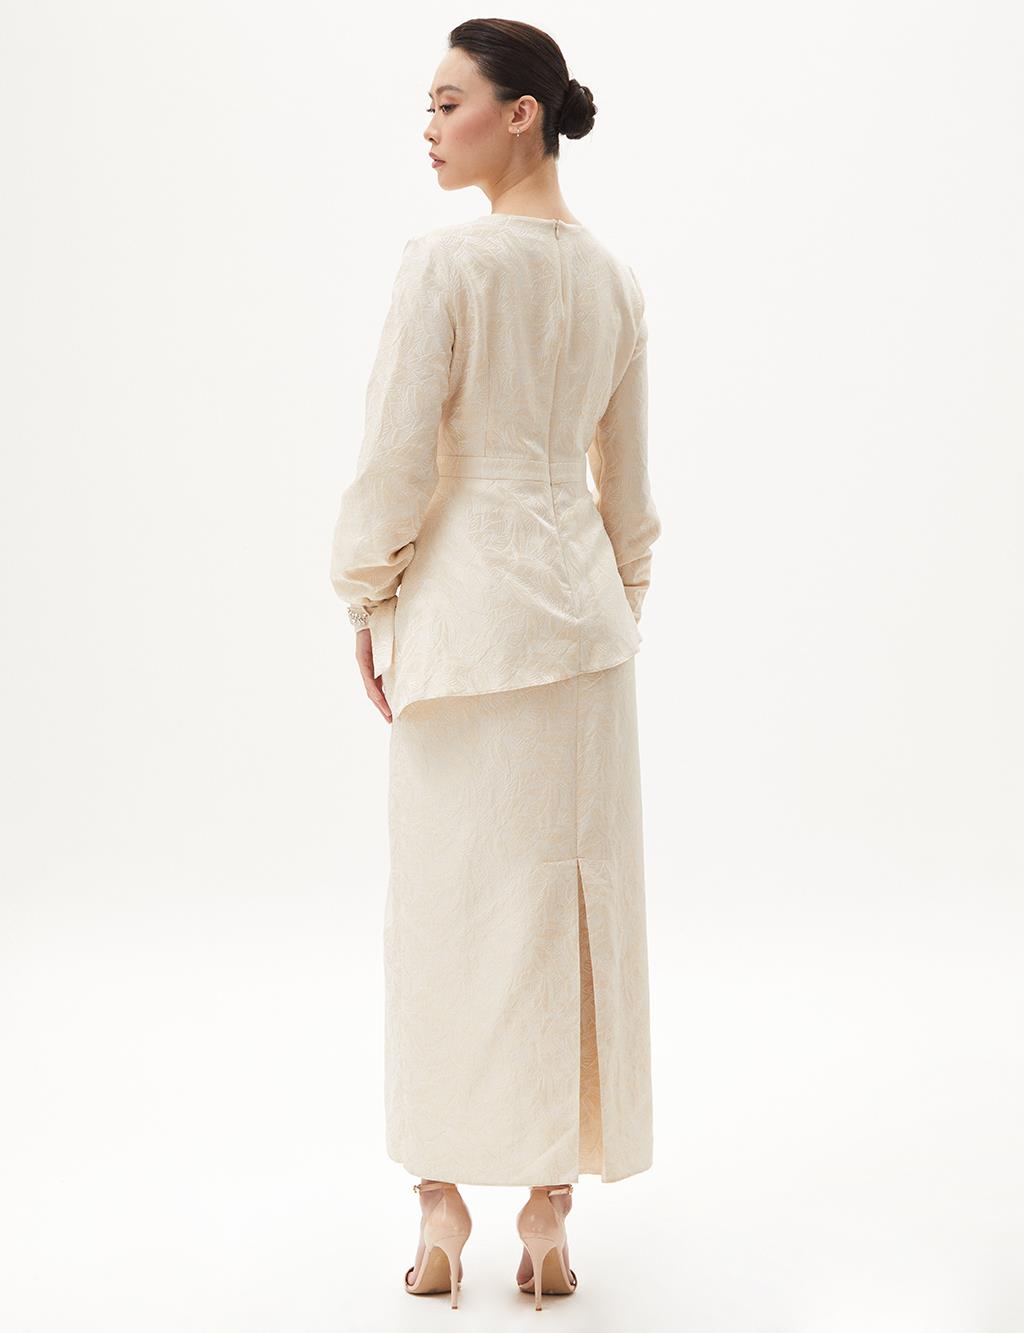 Jacquard Stone Embroidered Dress Cream